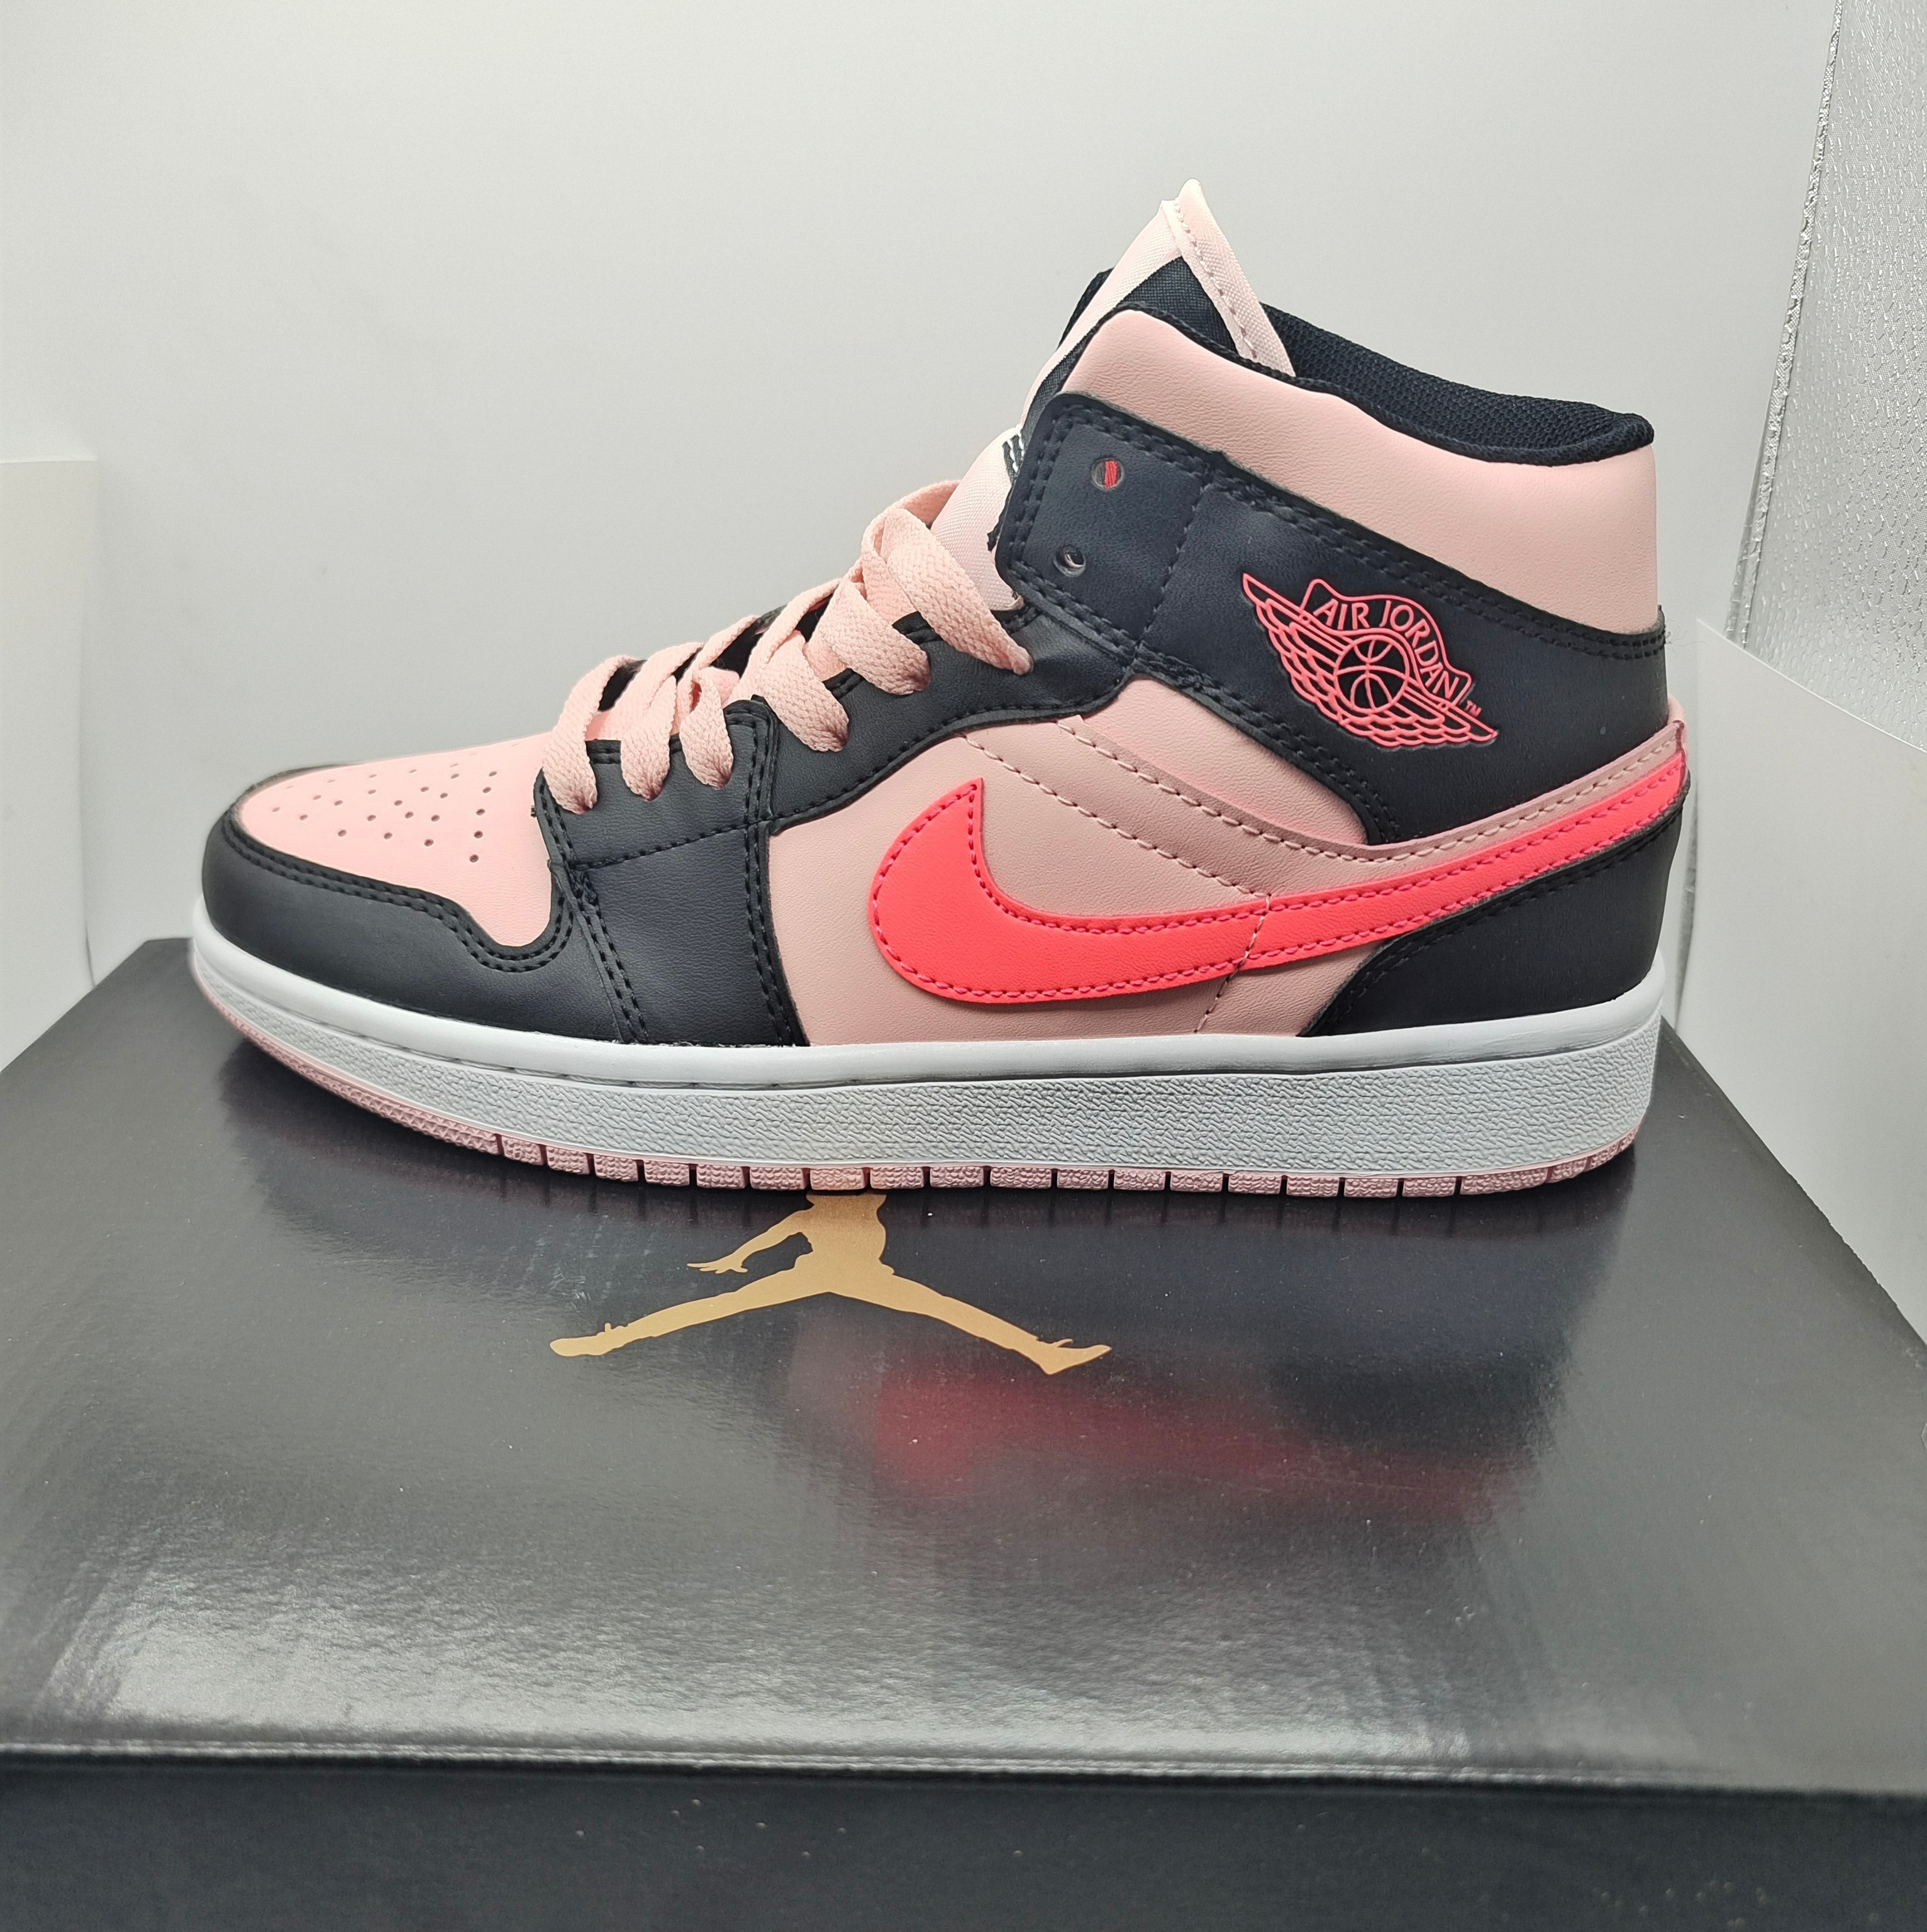 Women's Running Weapon Air Jordan 1 Pink/Black Shoes 0205